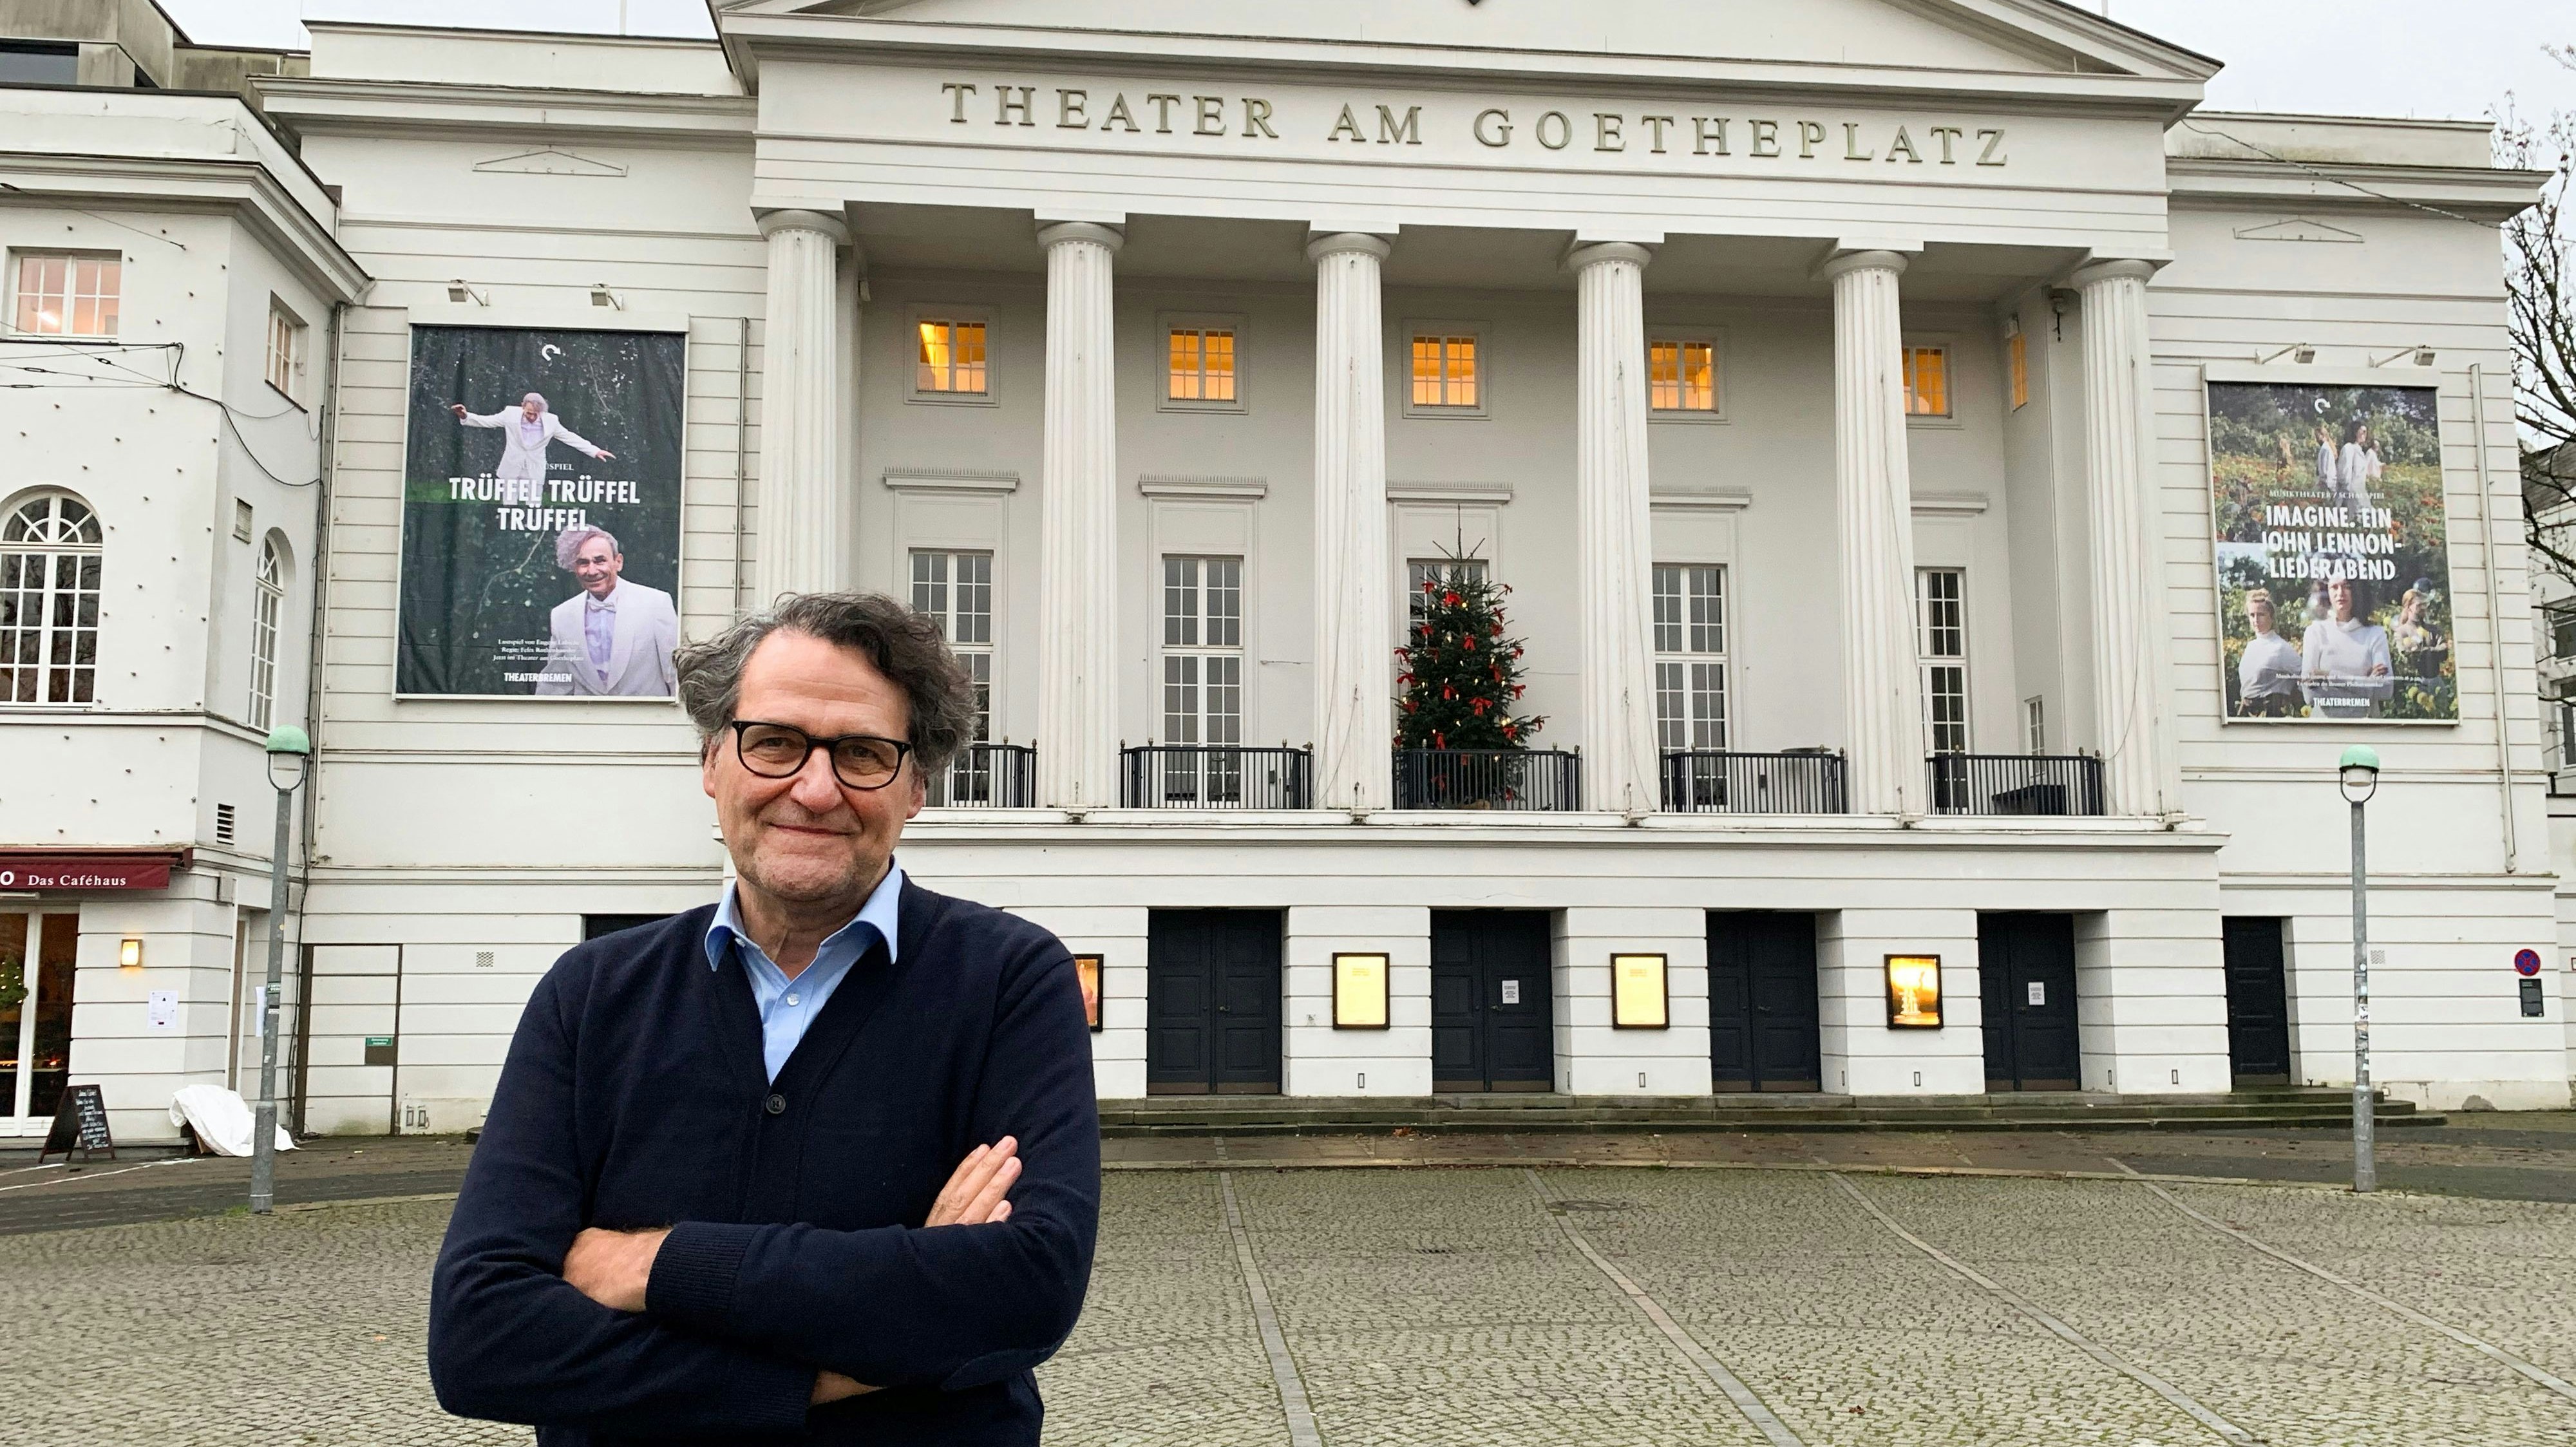 Bleibt der Hansestadt verbunden: Michael Börgerding hat seinen Vertrag als Generalintendant des Theaters Bremen bis 2027 verlängert. Foto: König